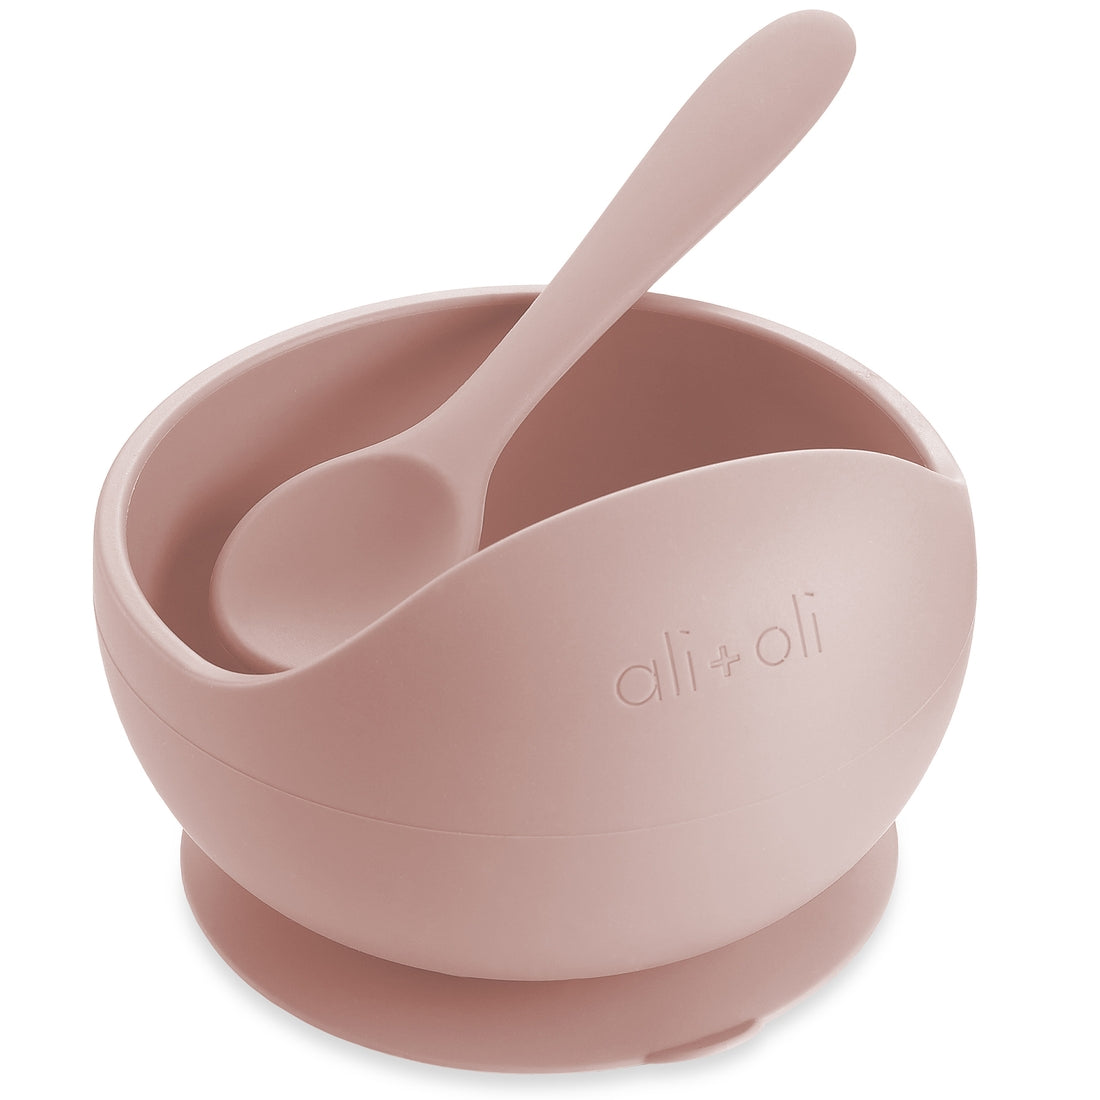 Silicone Suction Bowl & Spoon Set, Blush